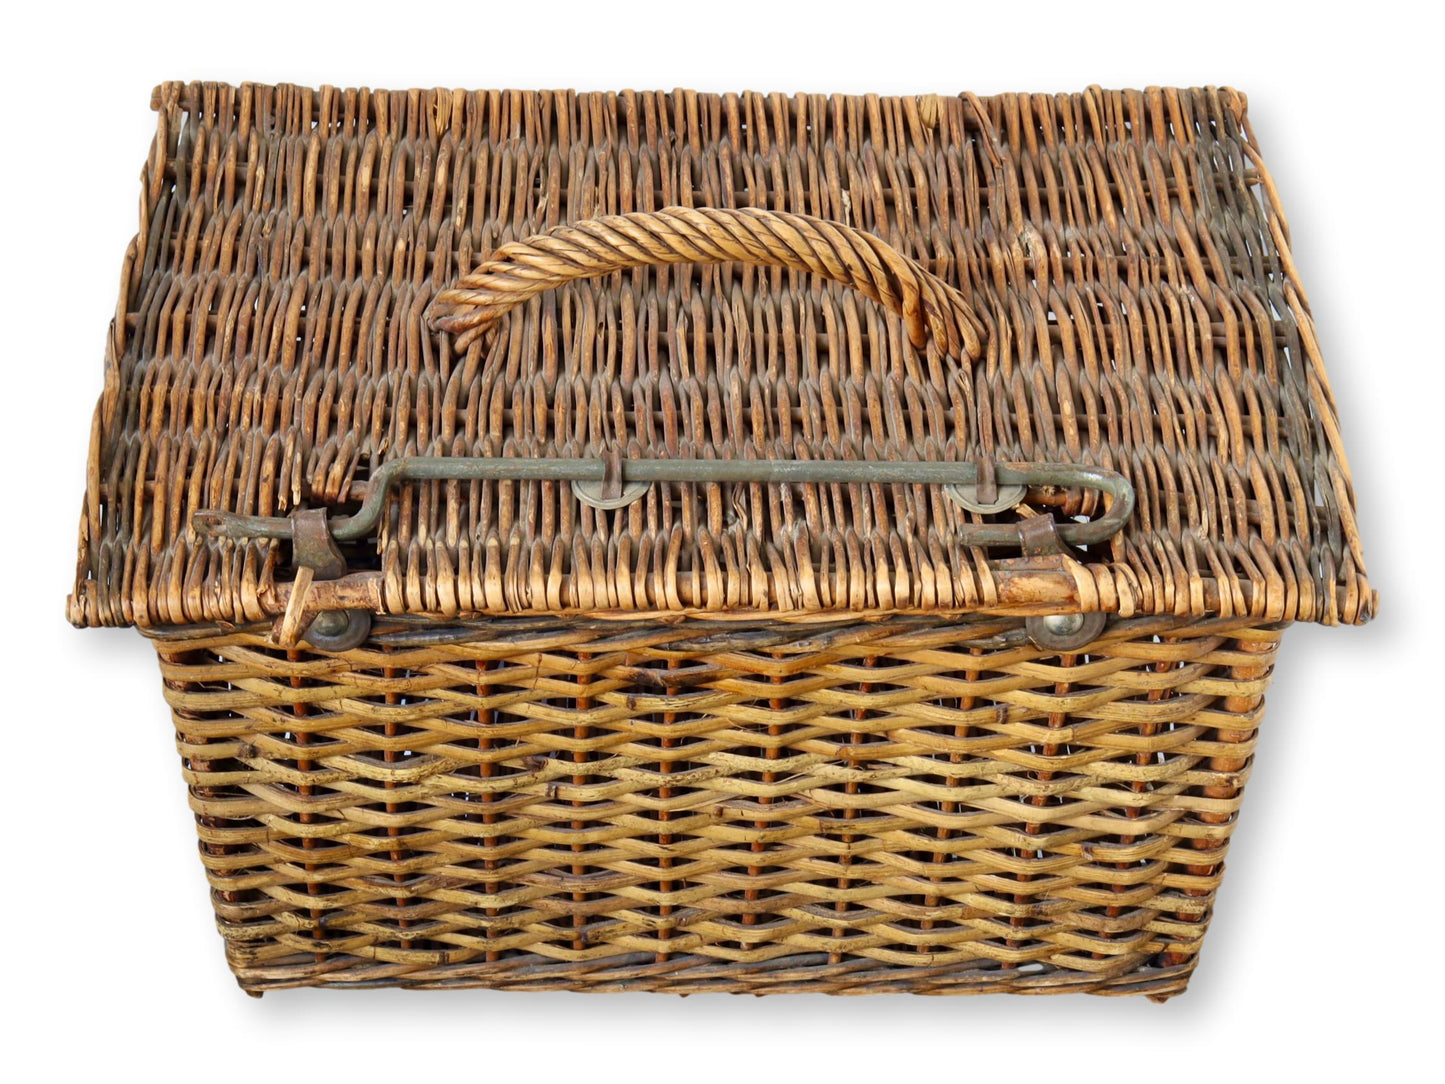 Antique French Fishing Basket